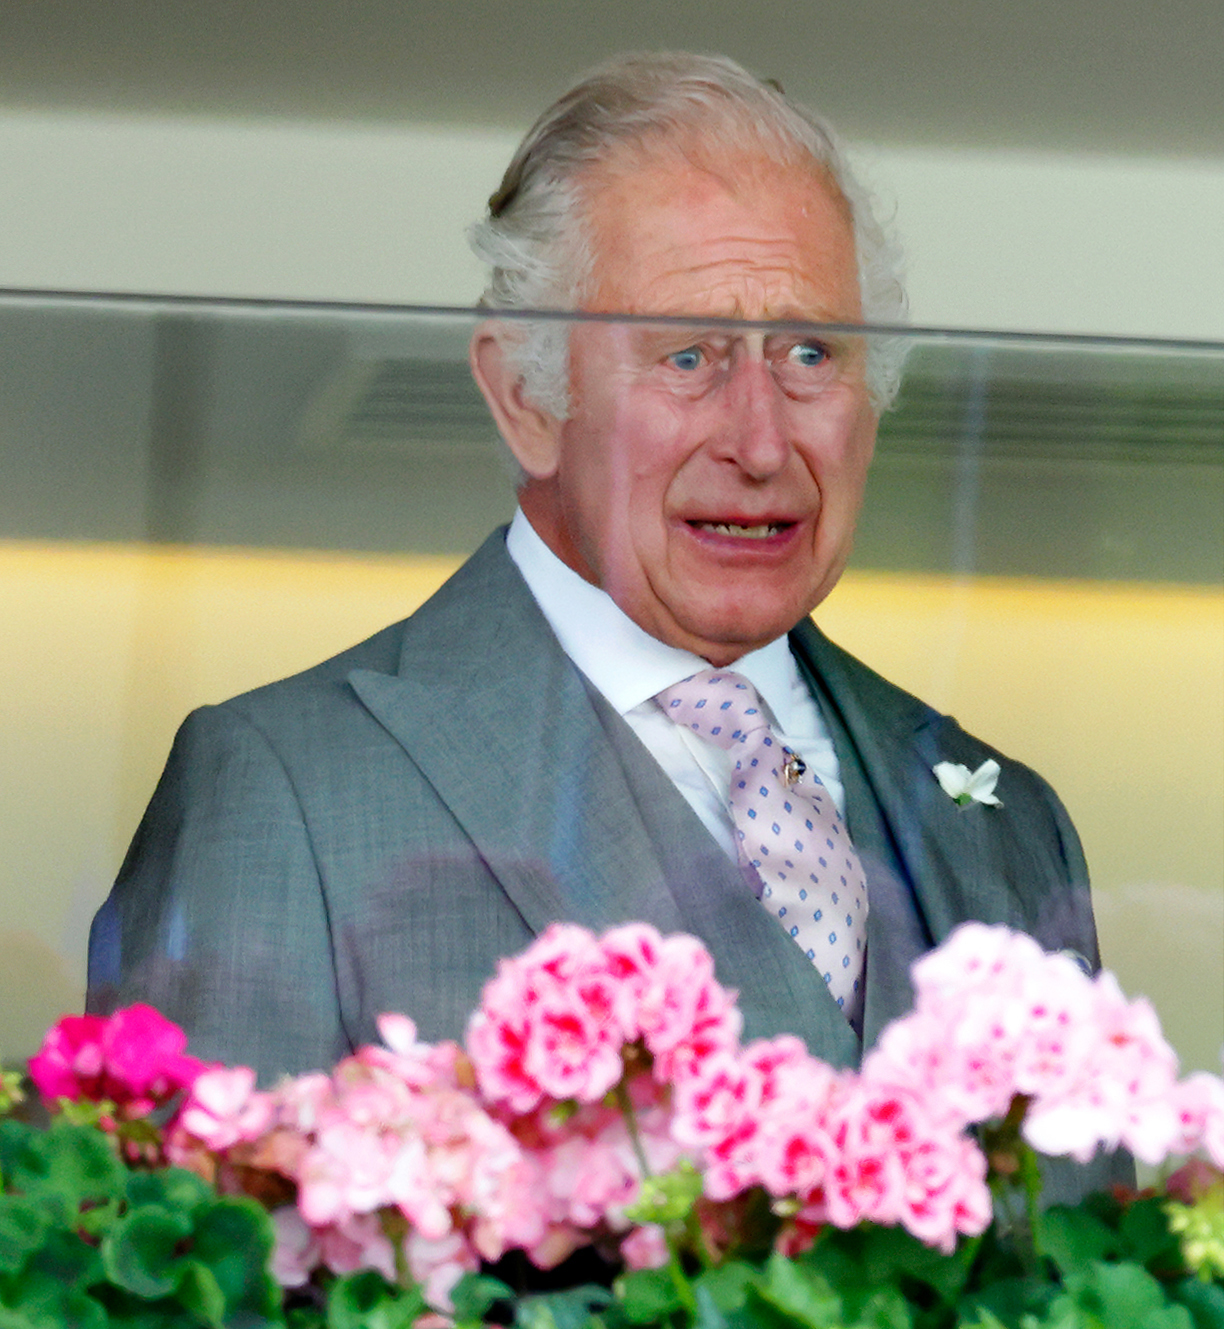 König Charles III. bei Royal Ascot am 22. Juni 2023 | Quelle: Getty Images